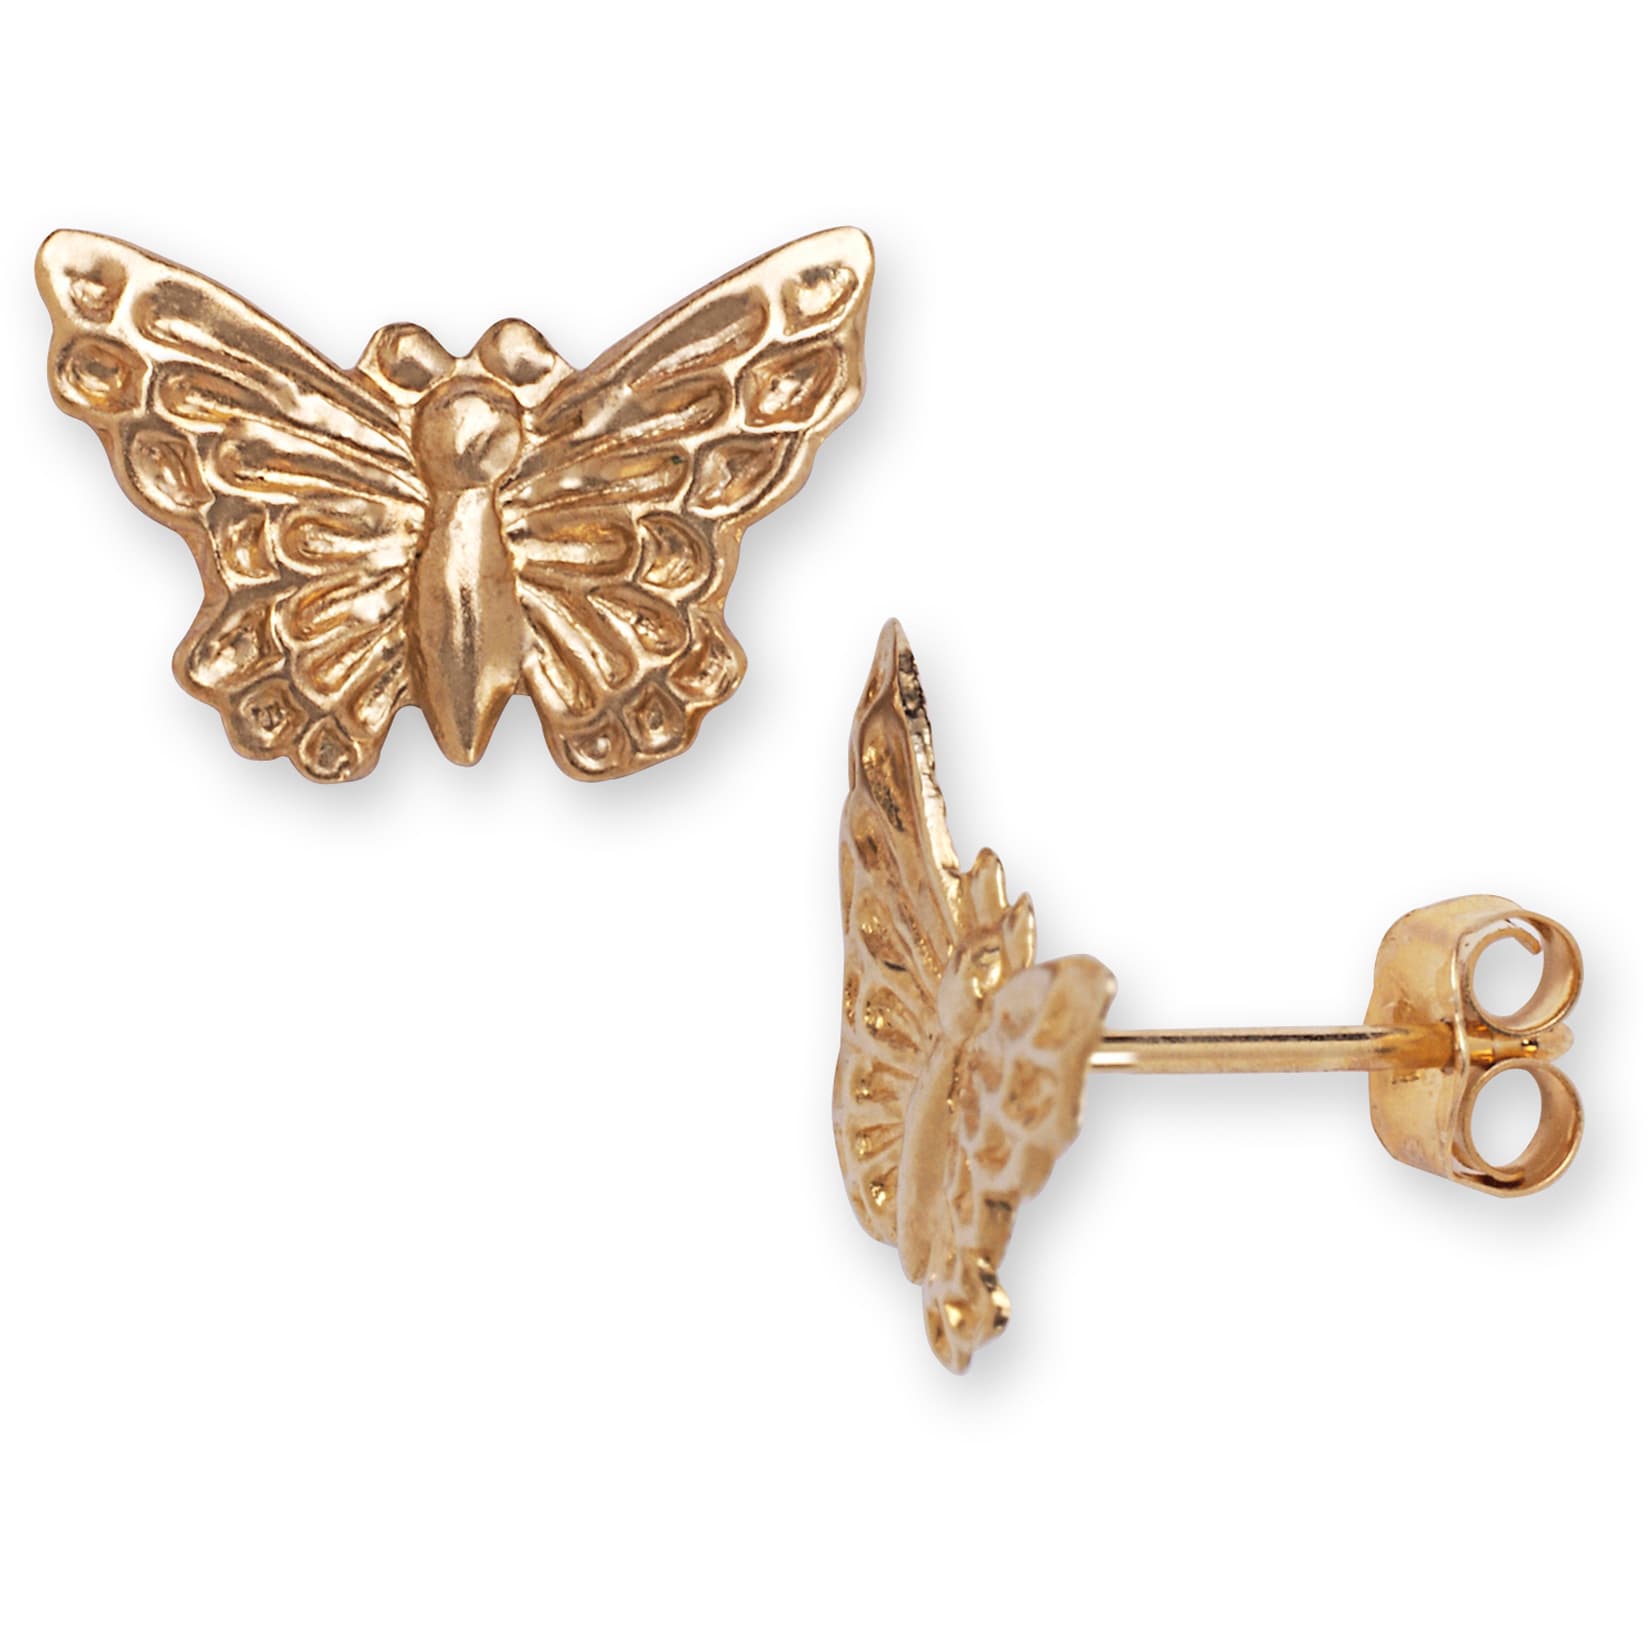 Buy Gold Set Of 3 Butterfly Hoop Earrings Online - Accessorize India